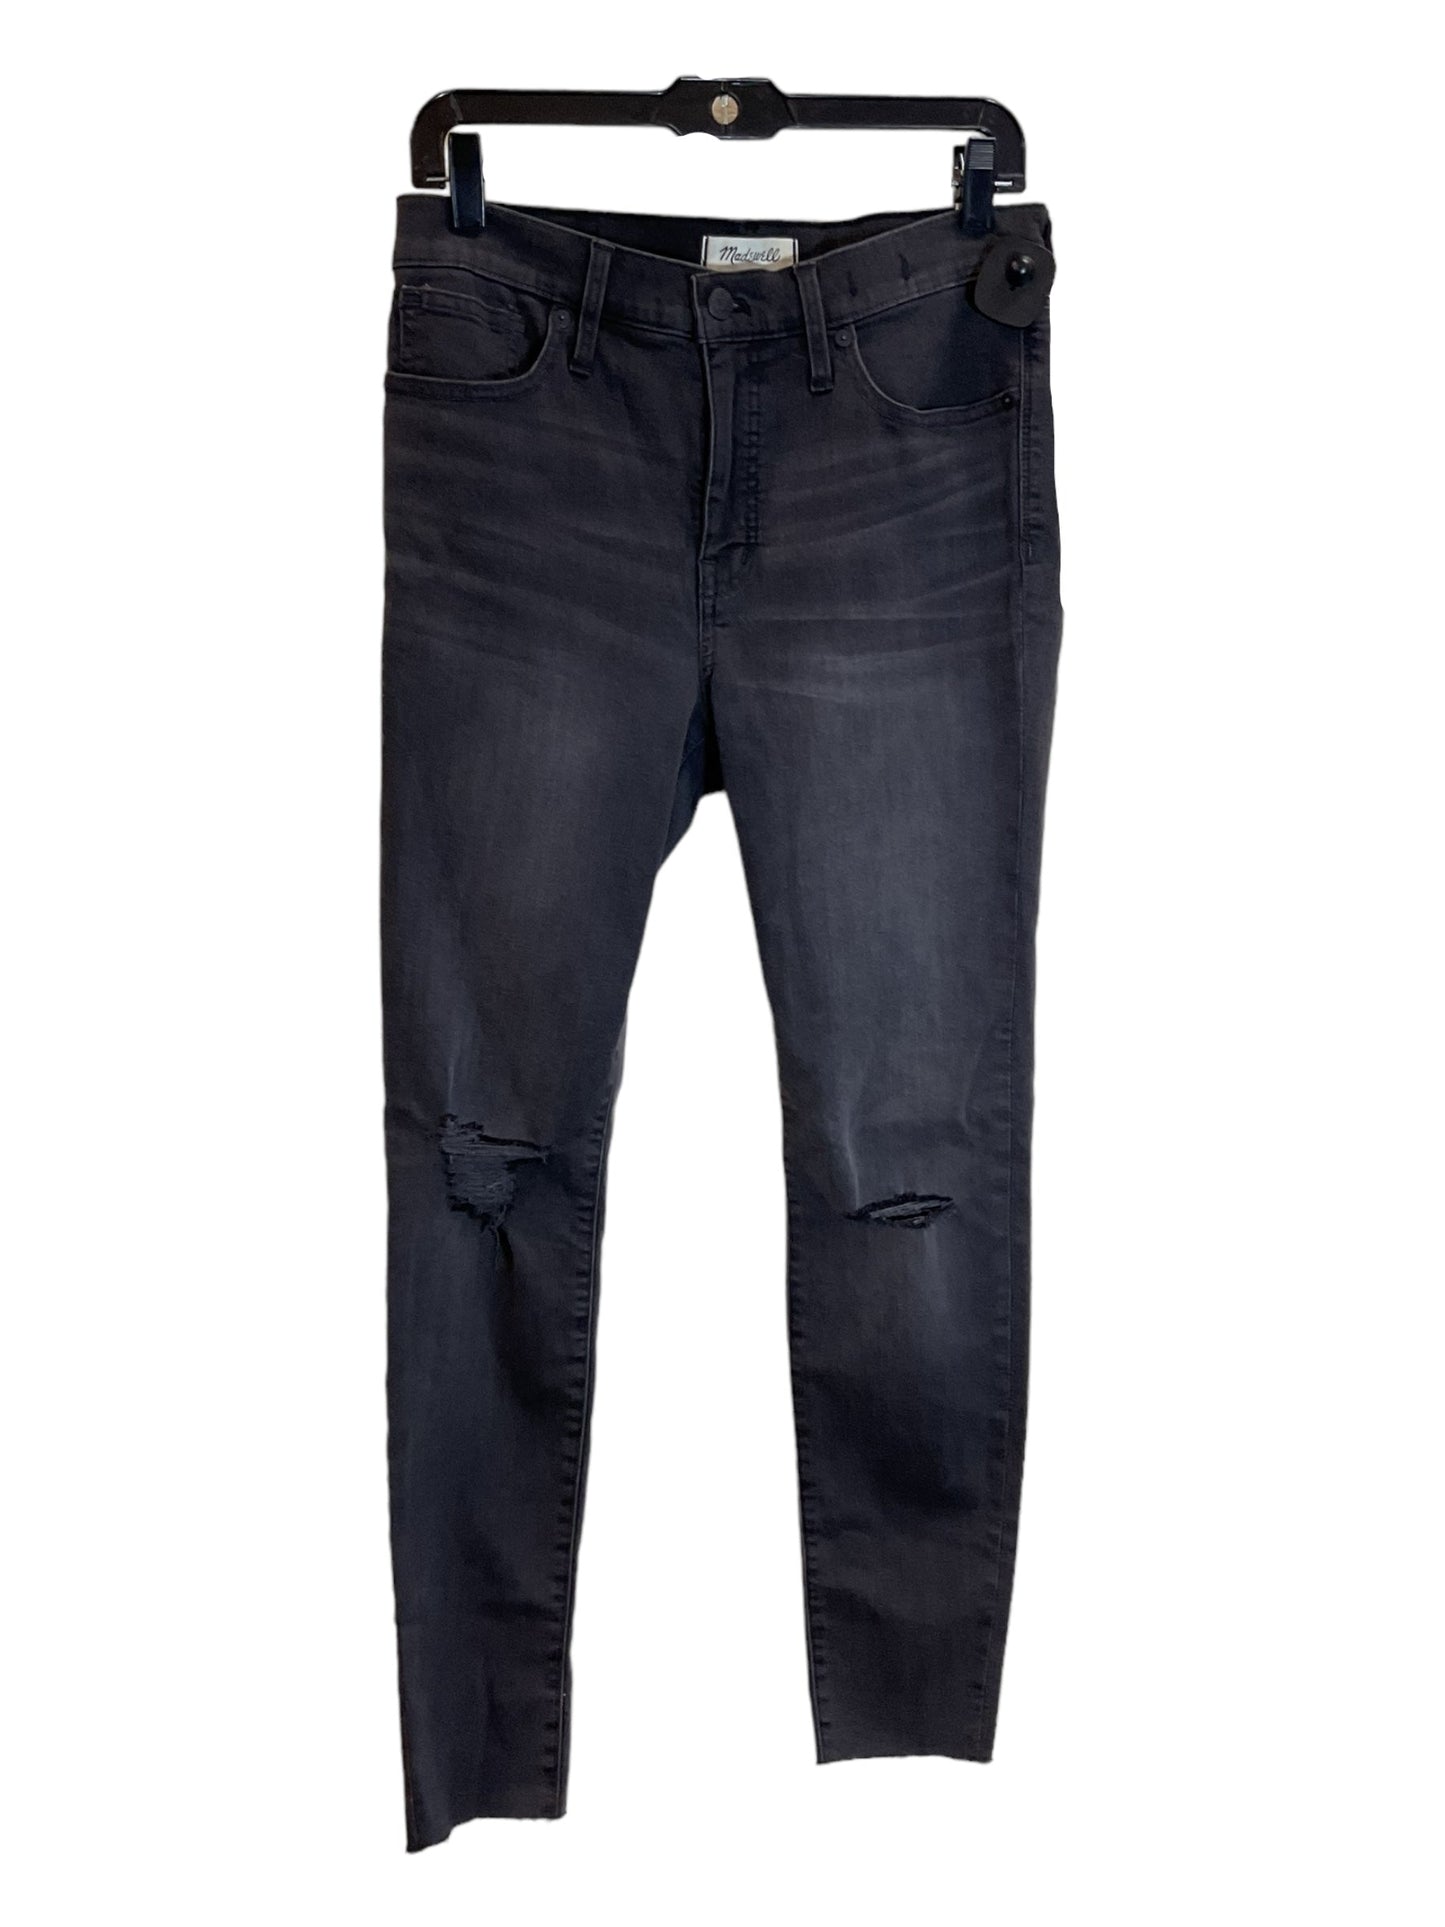 White Denim Jeans Designer Adriano Goldschmied, Size 8